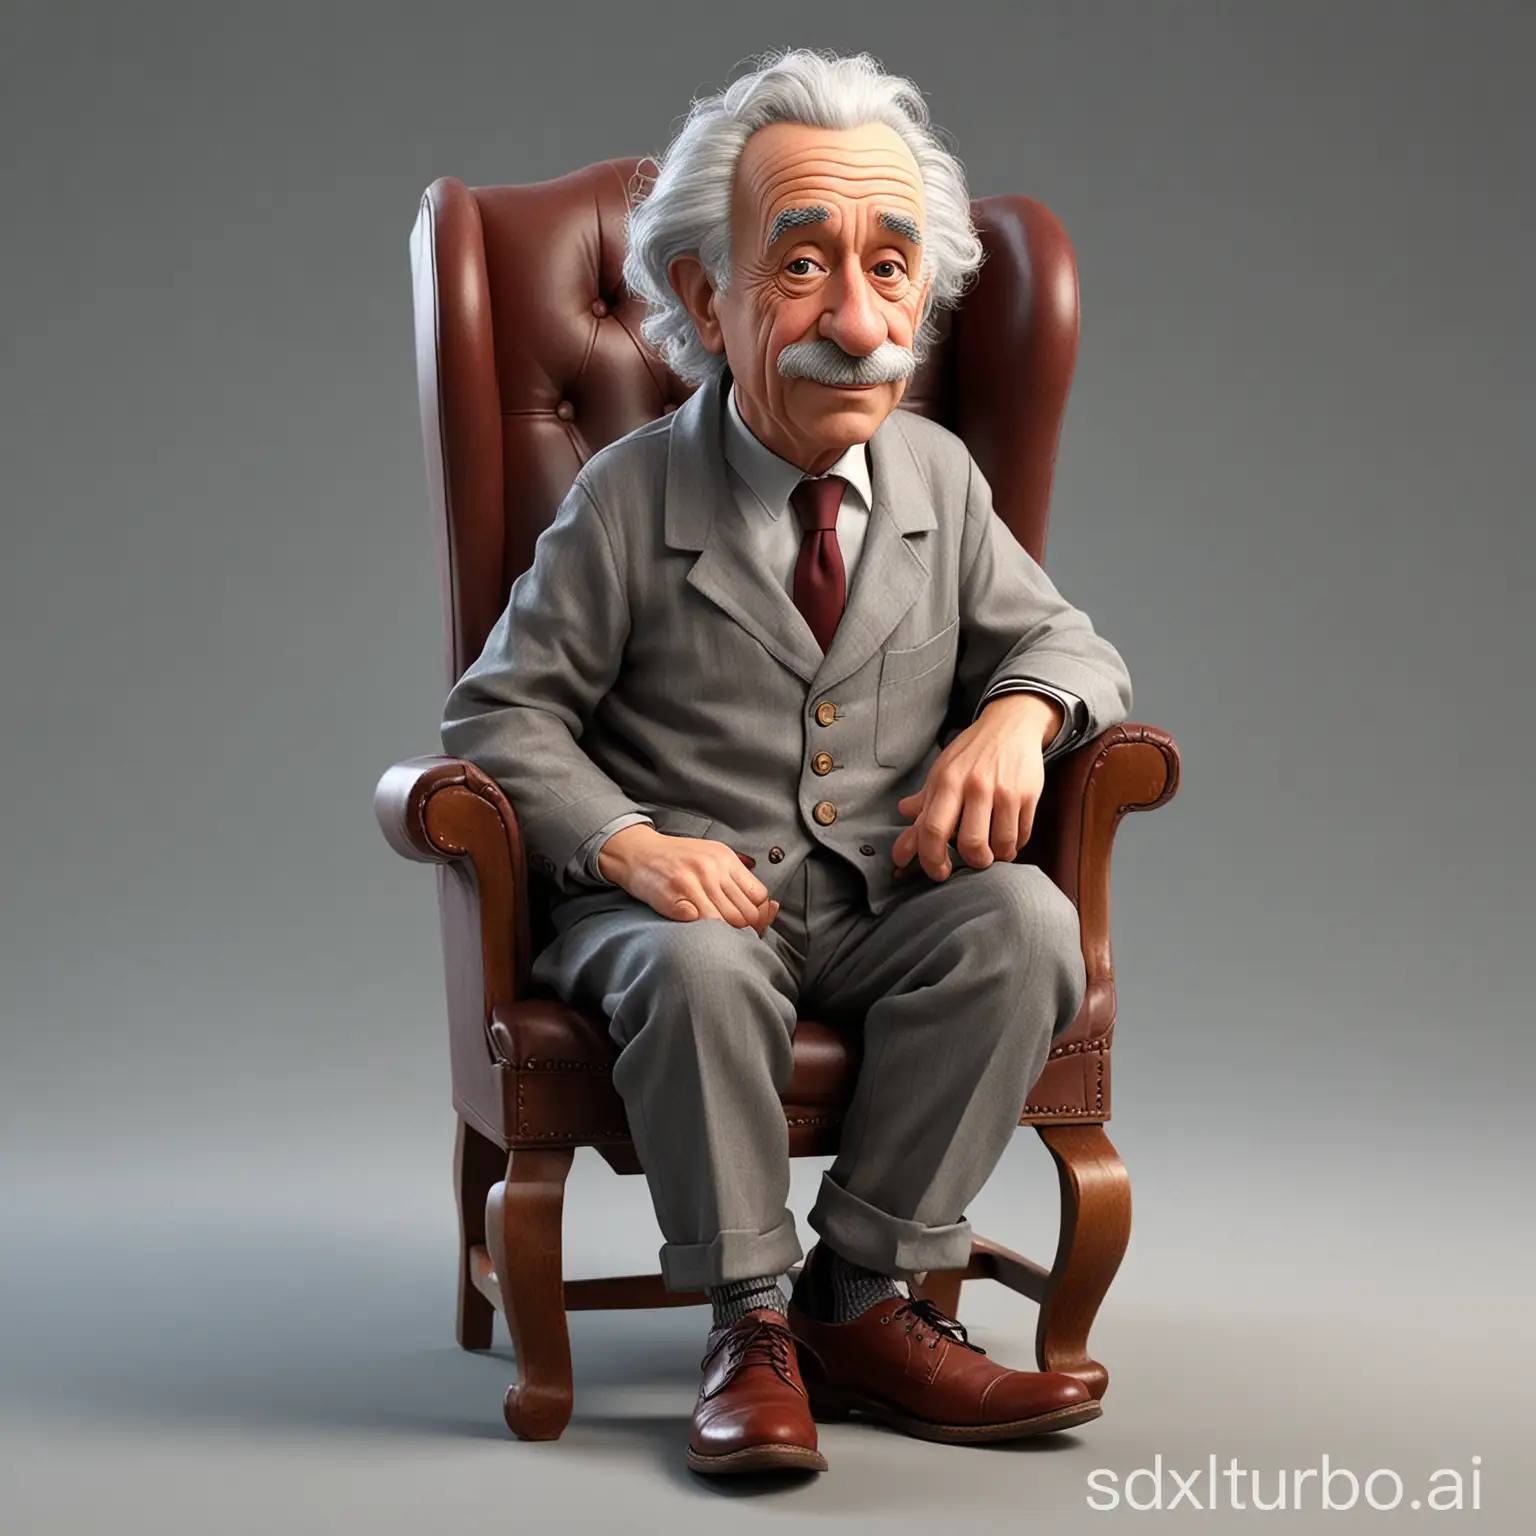 Realistic-Disney-Pixarstyle-Caricature-Portrait-of-Albert-Einstein-in-Wingback-Chair